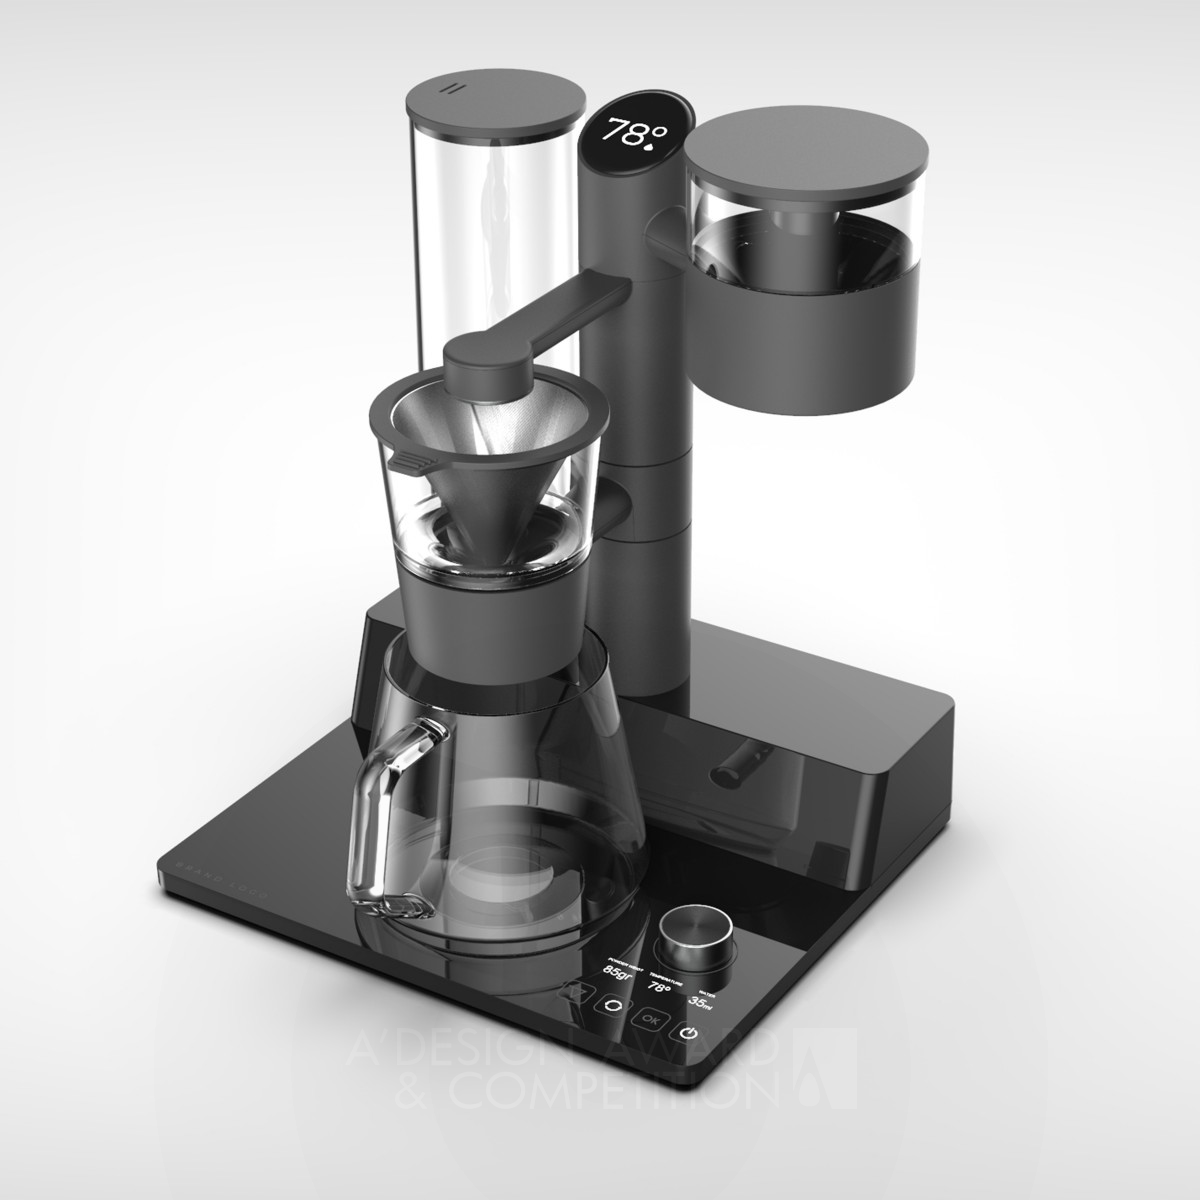 Nicola Zanetti wins Silver at the prestigious A' Home Appliances Design Award with WSD Speciality Coffee Maker.